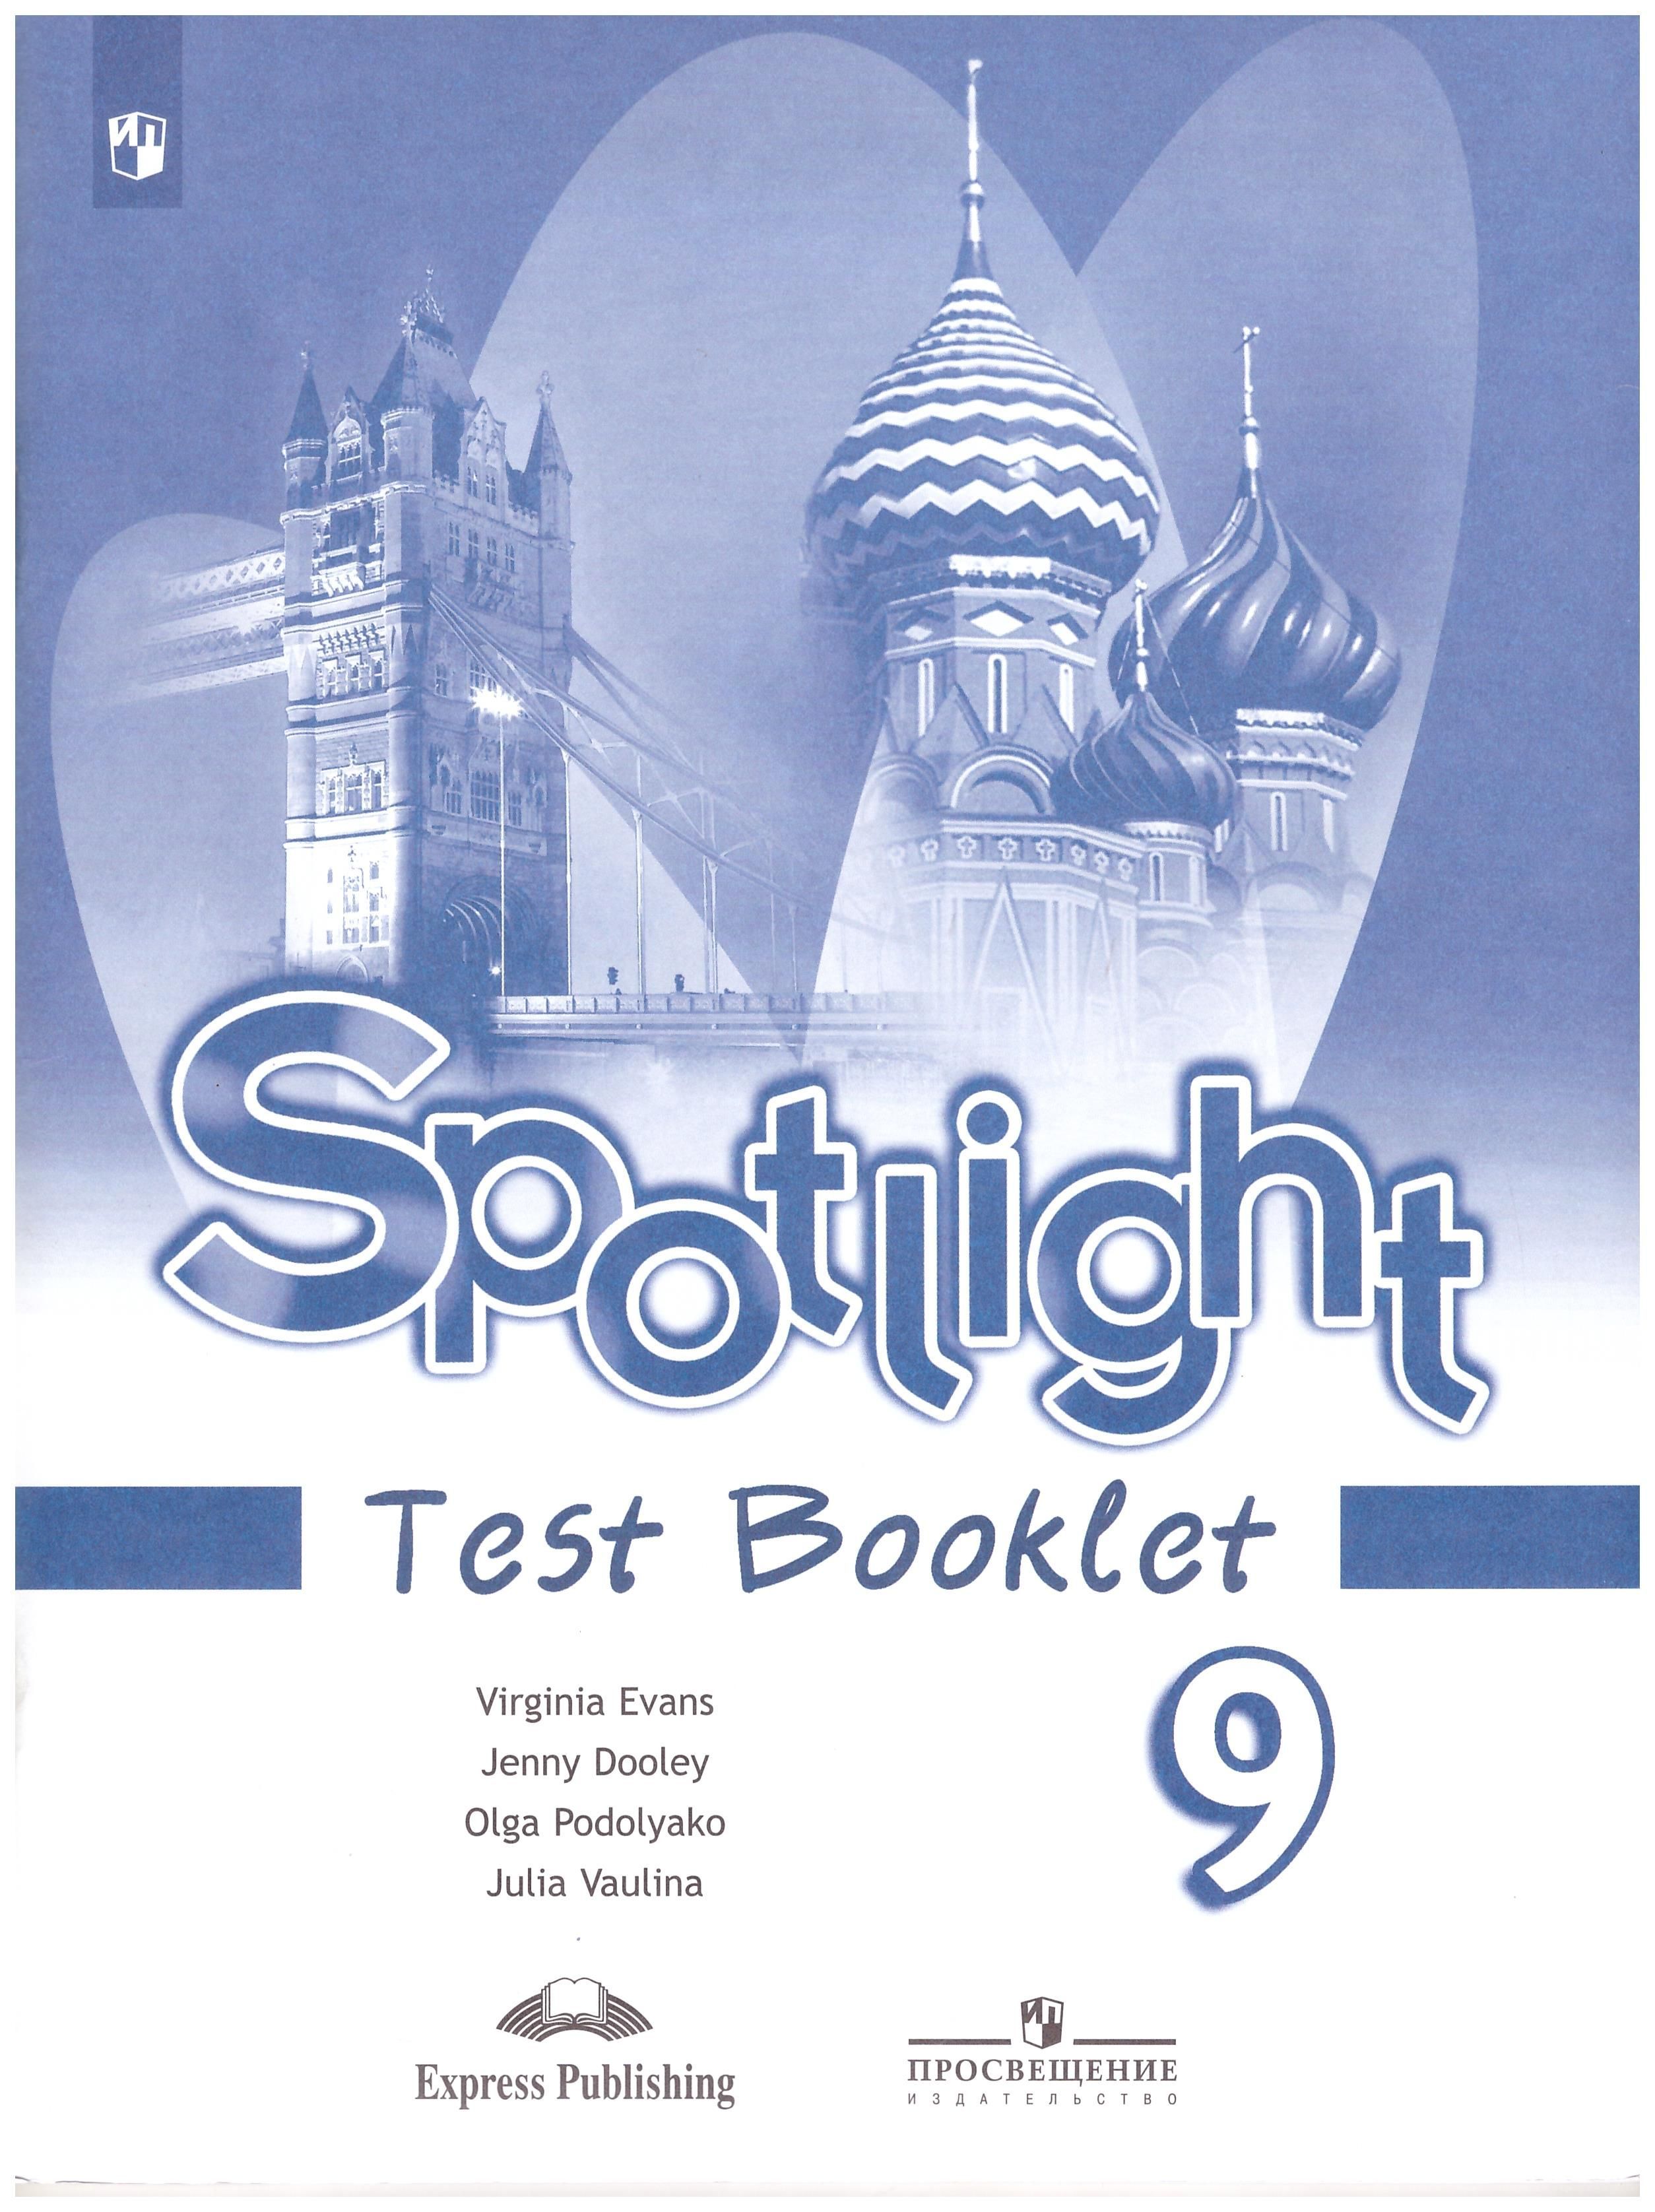 Сборник по английскому 9 класс spotlight. Test booklet 9 класс Spotlight ваулина. Английский язык 9 класс ваулина тест буклет. Спотлайт 11 класс тест буклет. Спотлайт 9 класс тест буклет.